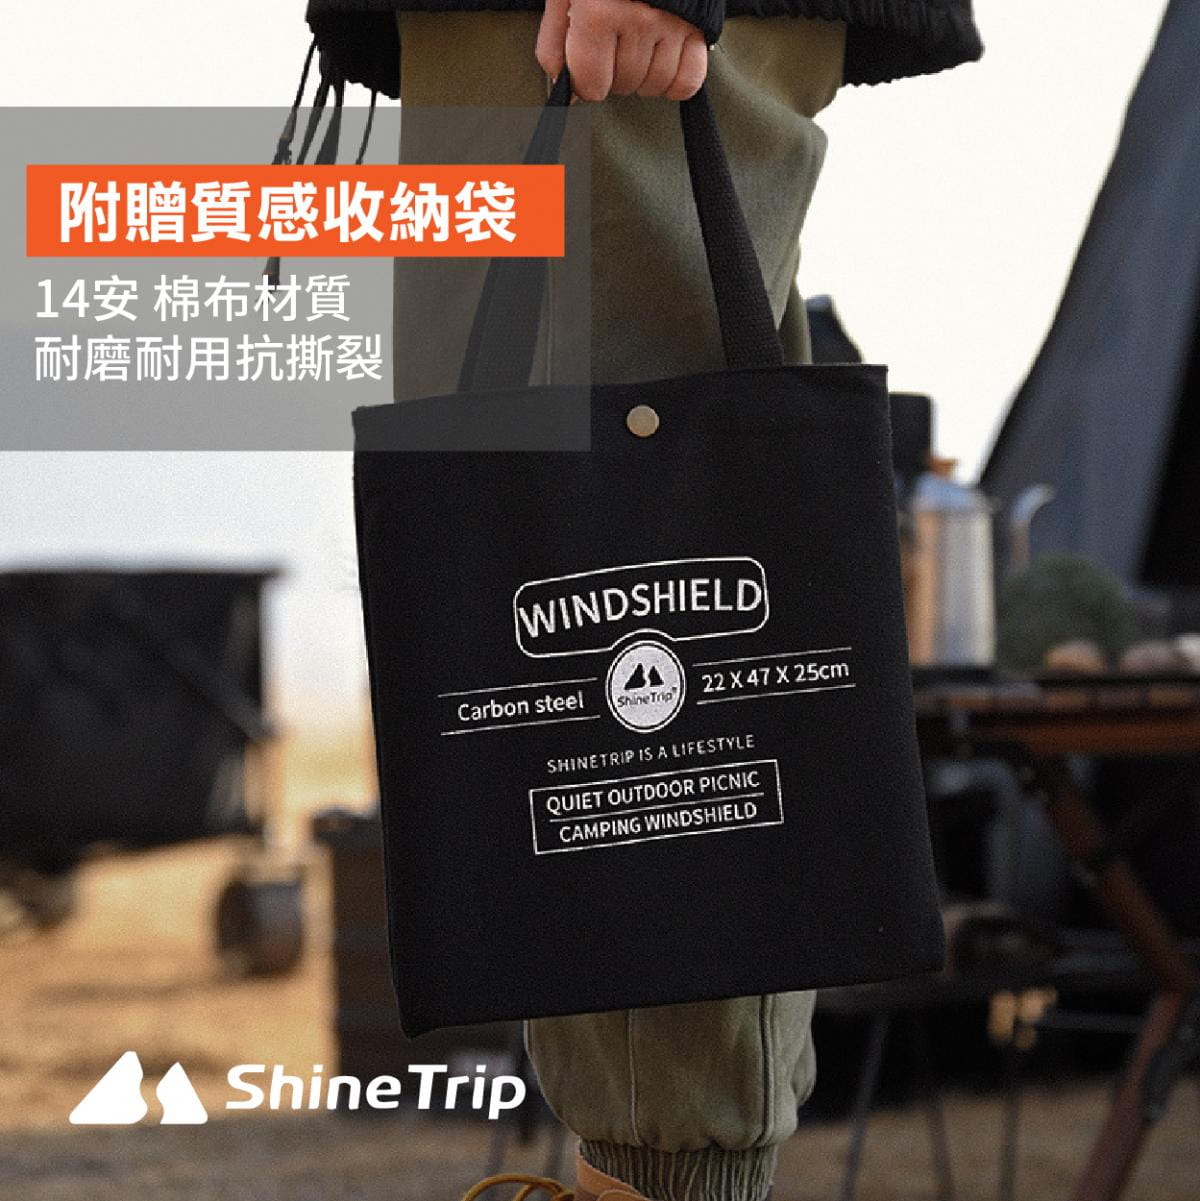 【ShineTrip山趣】暢炊露營擋風板 悠遊戶外 7